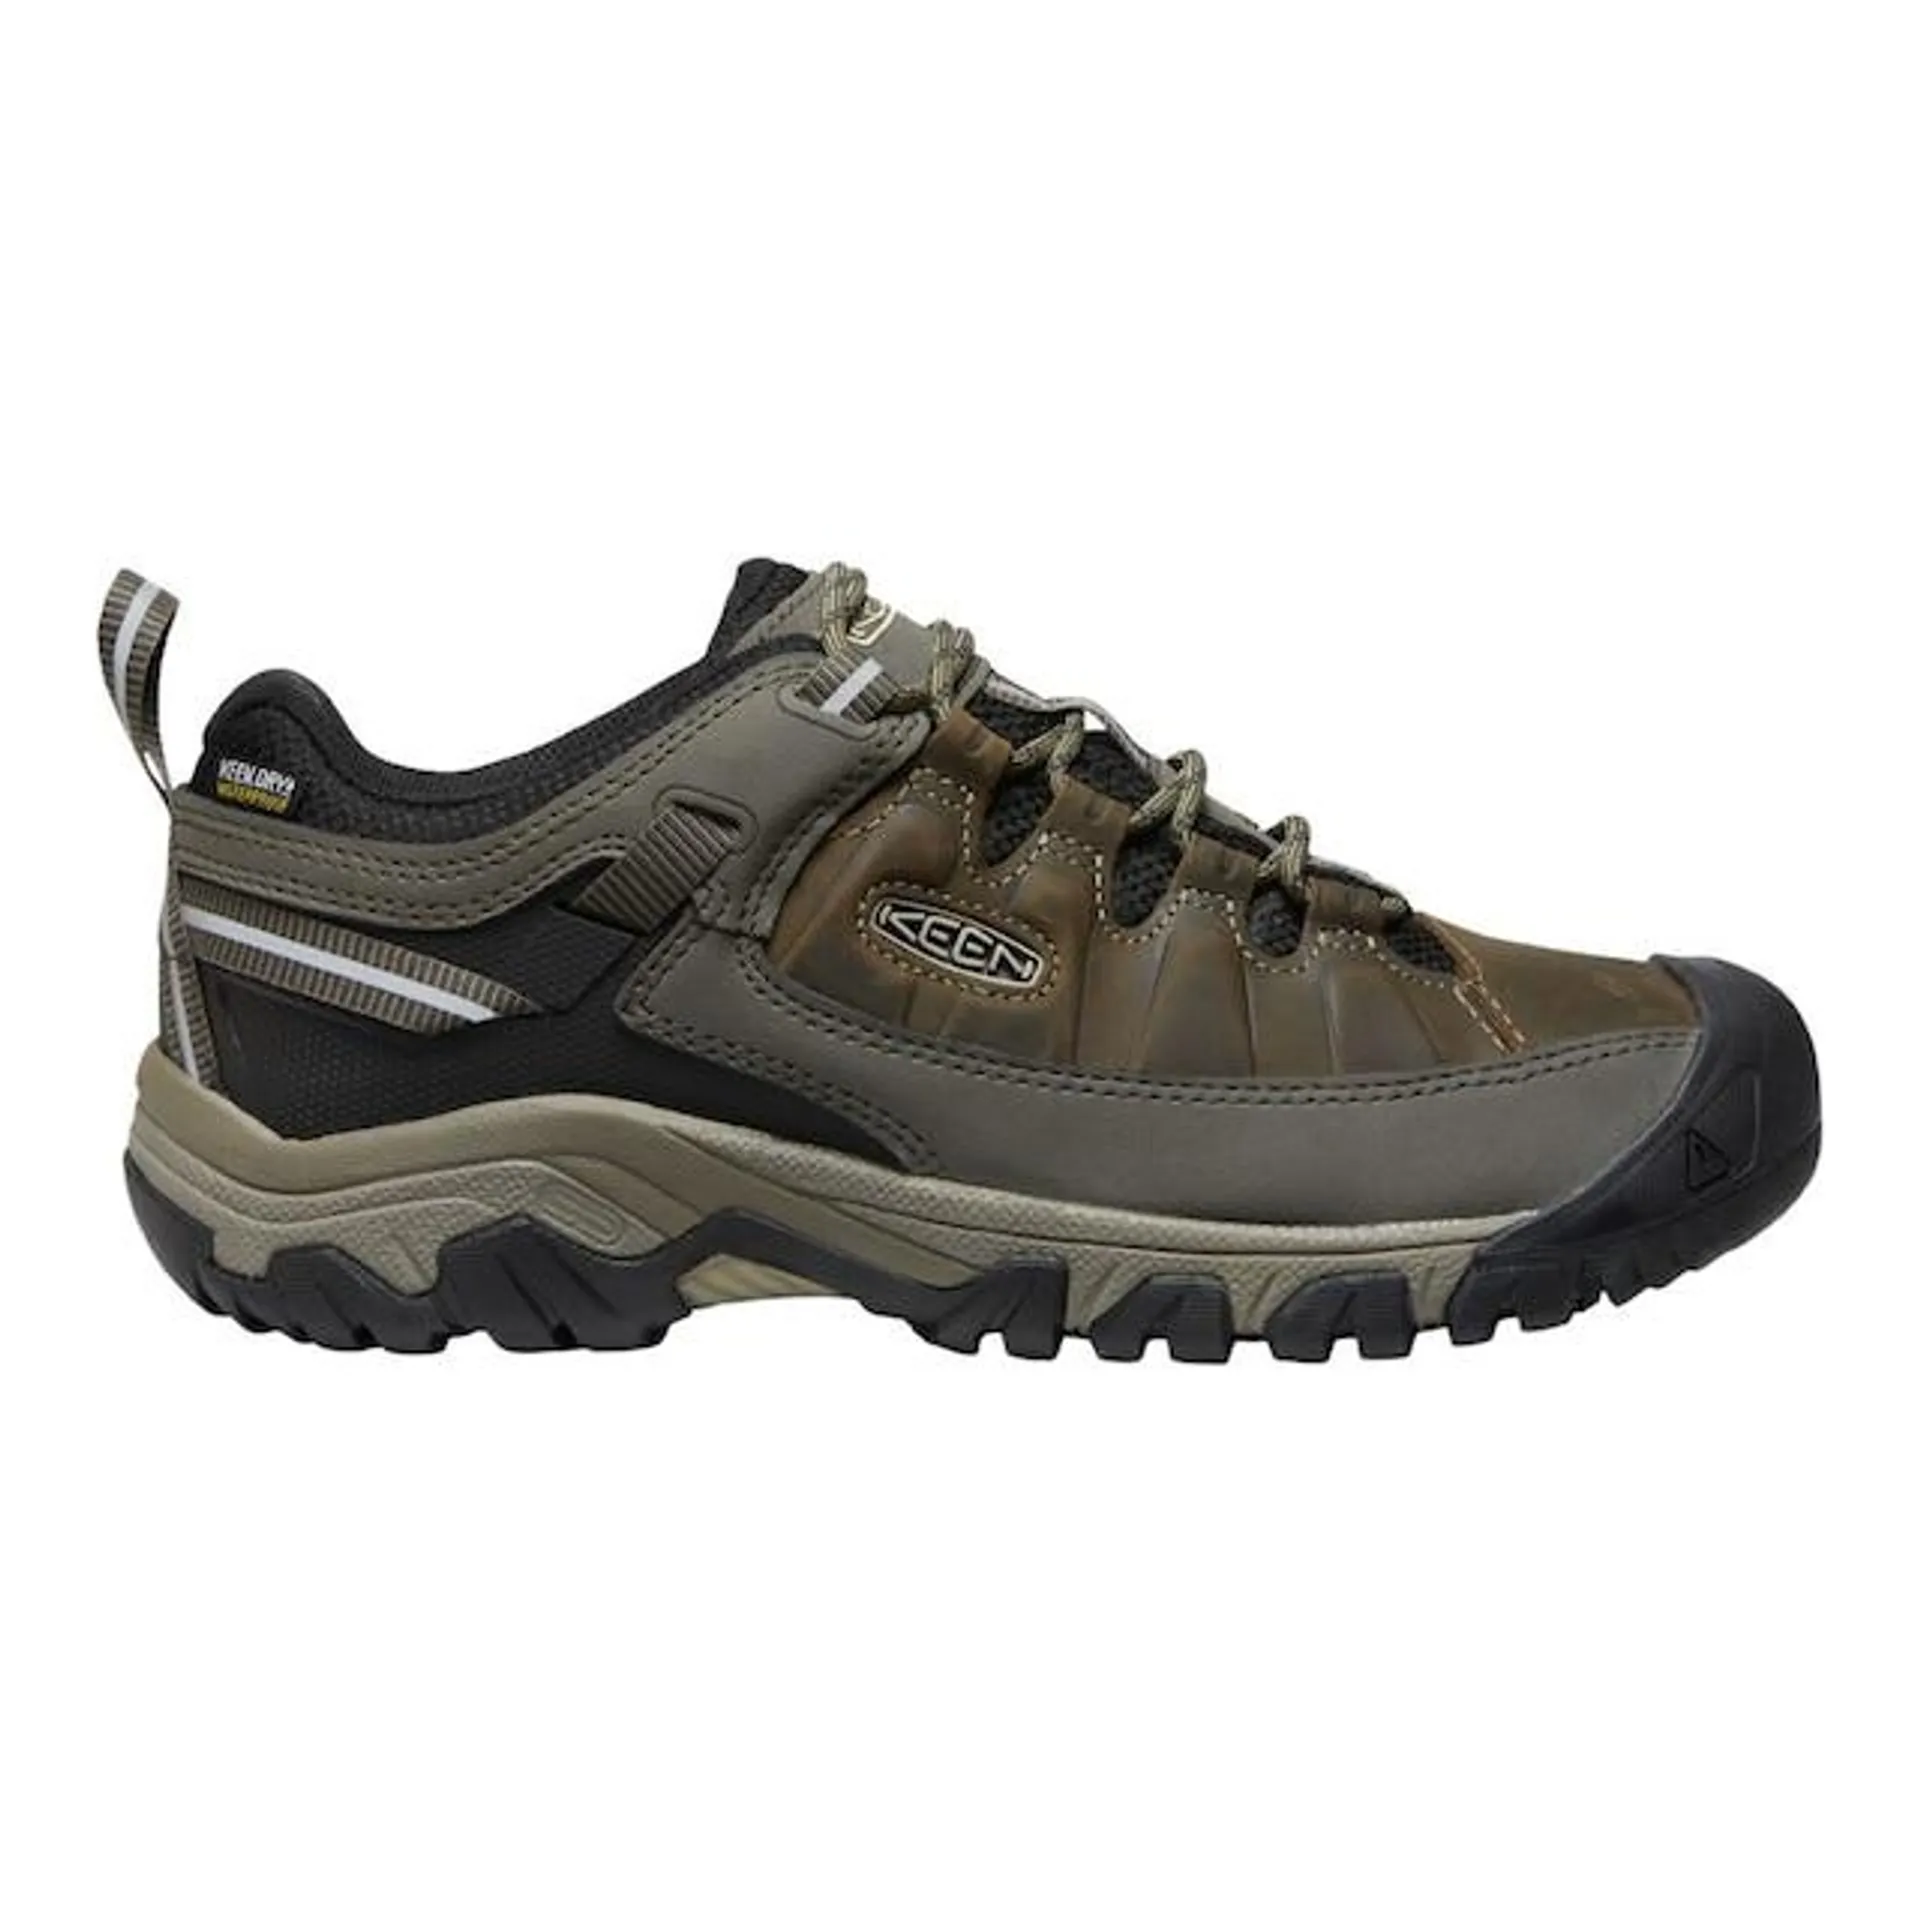 Keen Men's Targhee III Waterproof Hiking Shoes